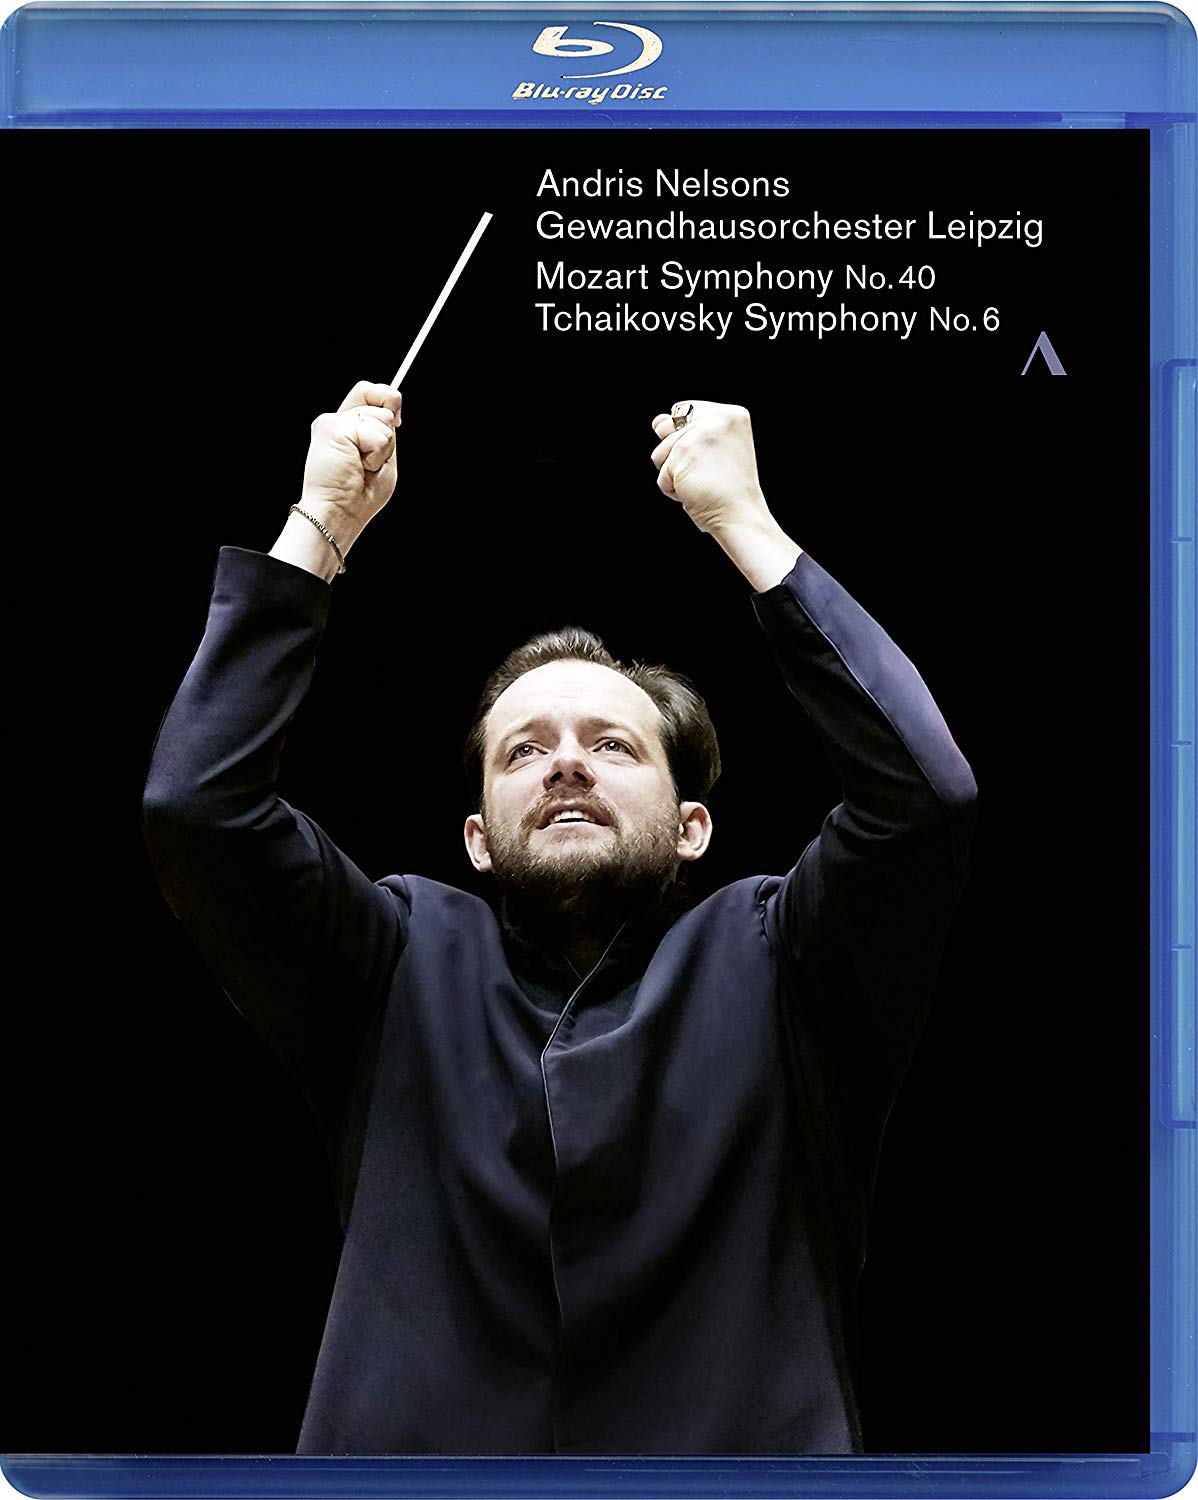 Music Blu-Ray Wolfgang Amadeus Mozart / Pyotr Ilyich Tchaikovsky - Simphony No.40 / Symphony No.6 NUOVO SIGILLATO, EDIZIONE DEL 28/02/2019 SUBITO DISPONIBILE